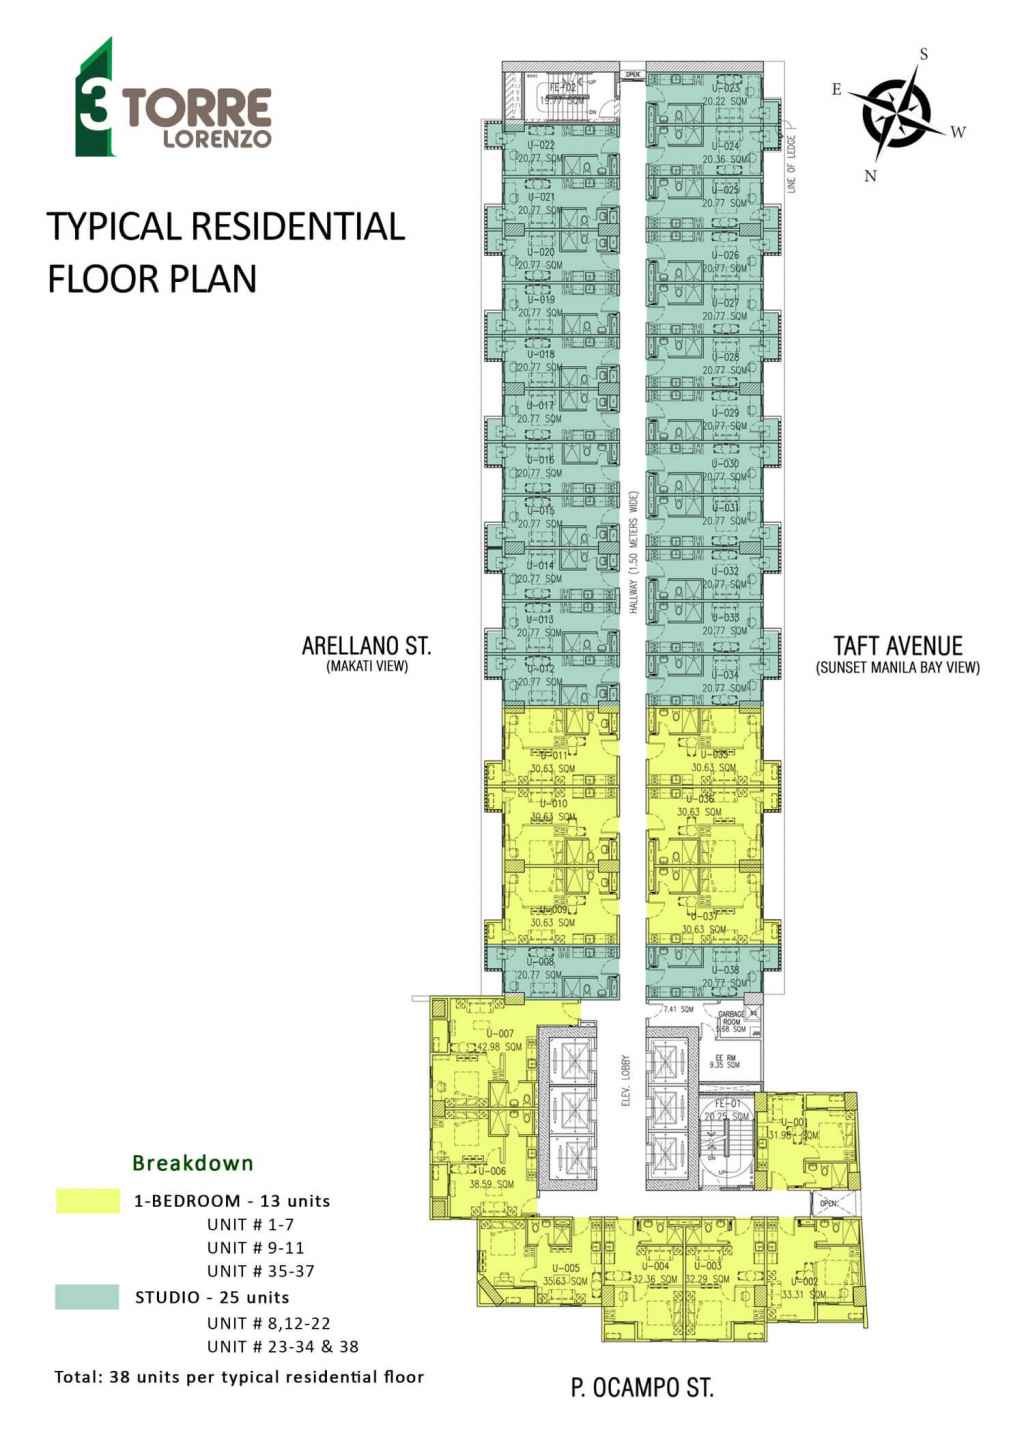 3Torre Lorenzo Typical Floor Plan